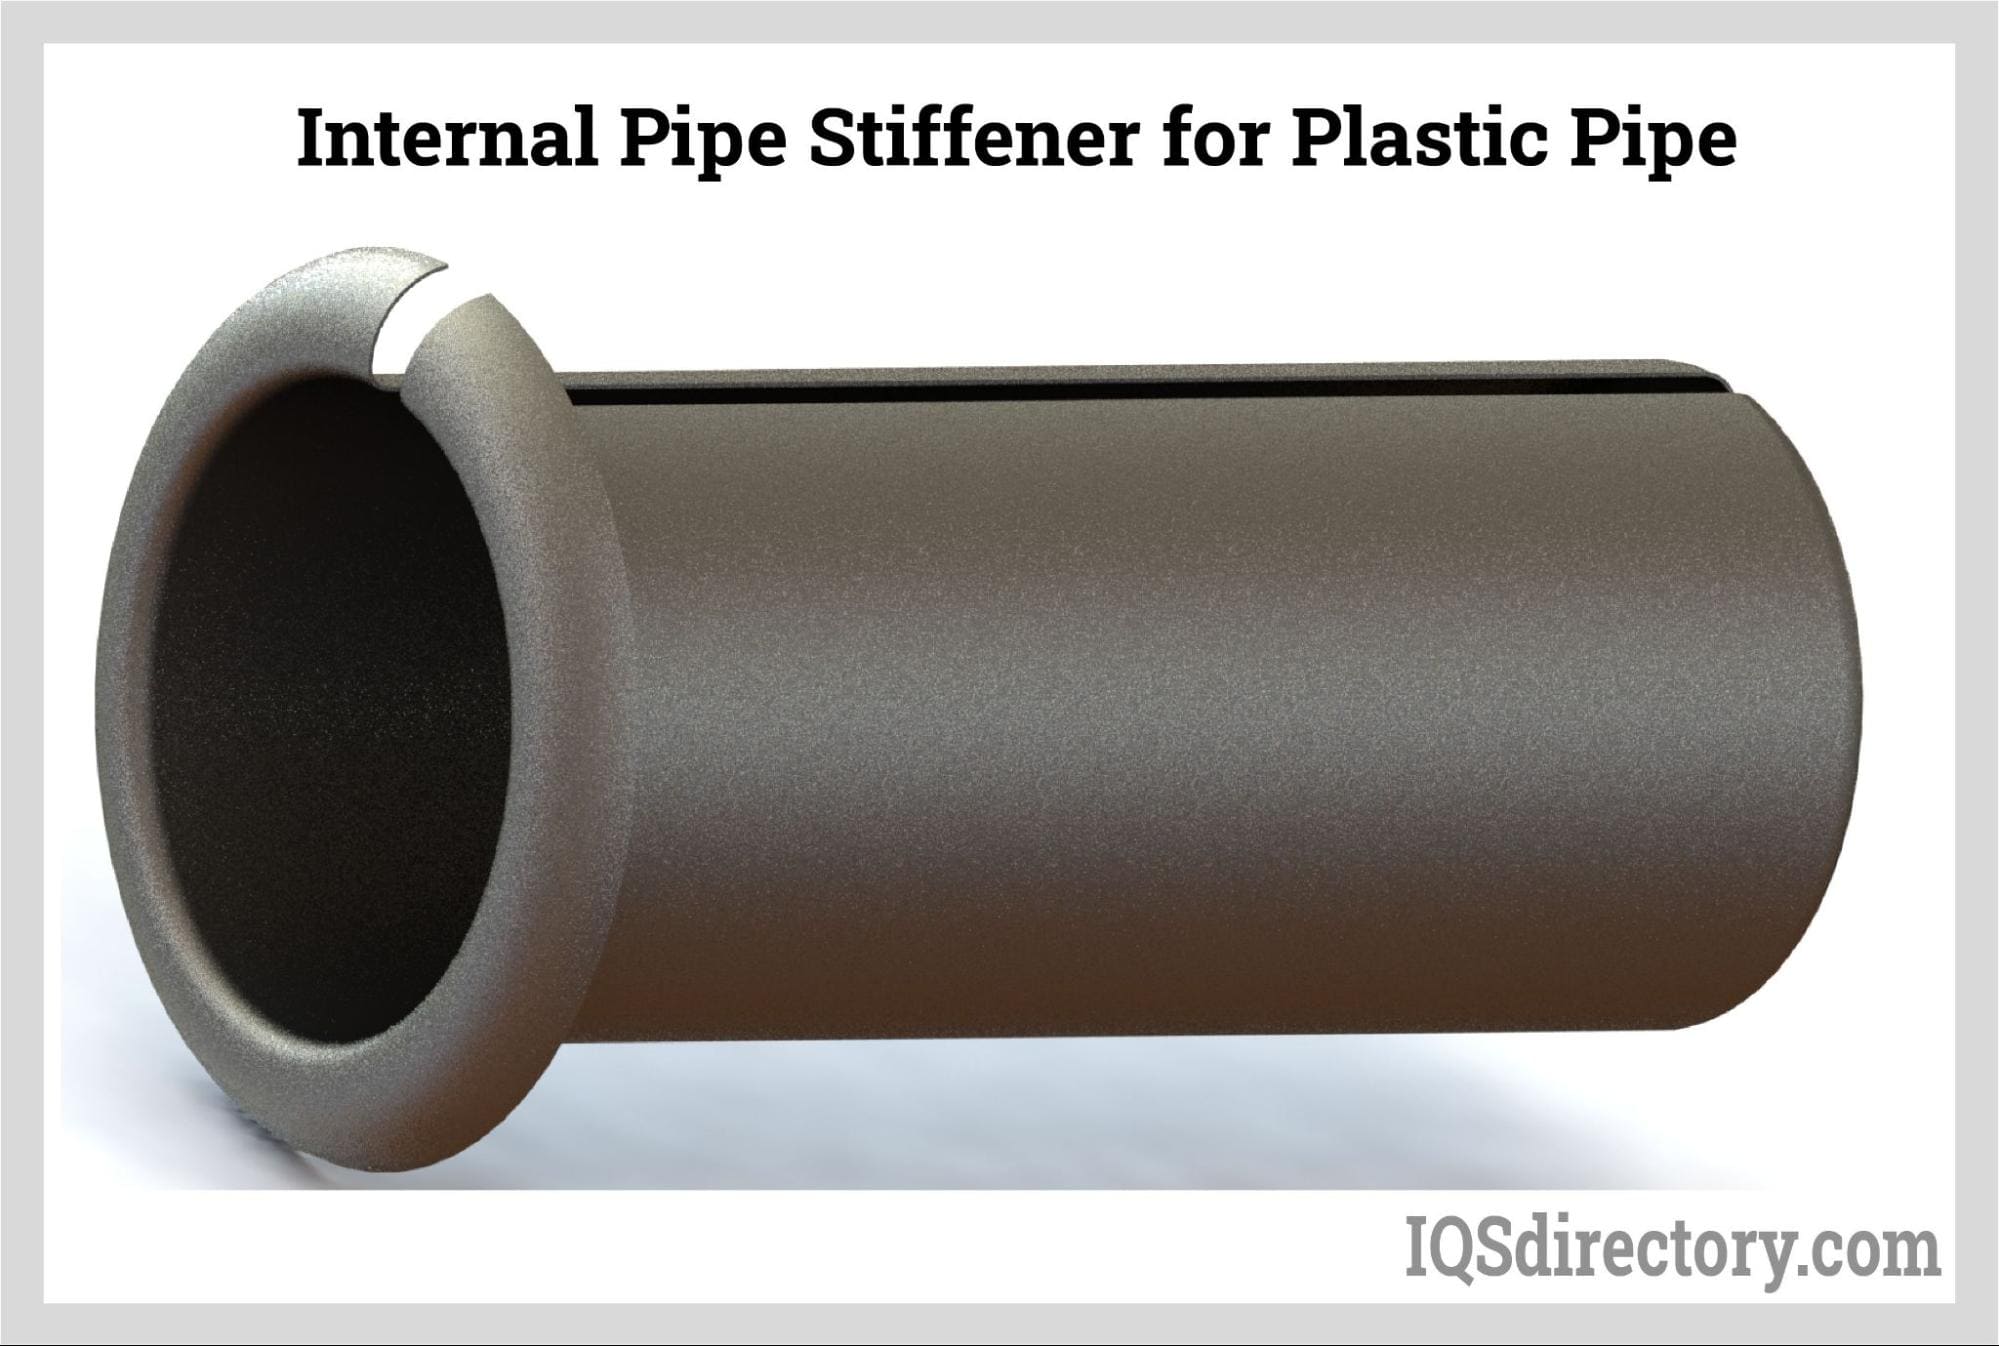 Internal Pipe Stiffener for Plastic Pipe